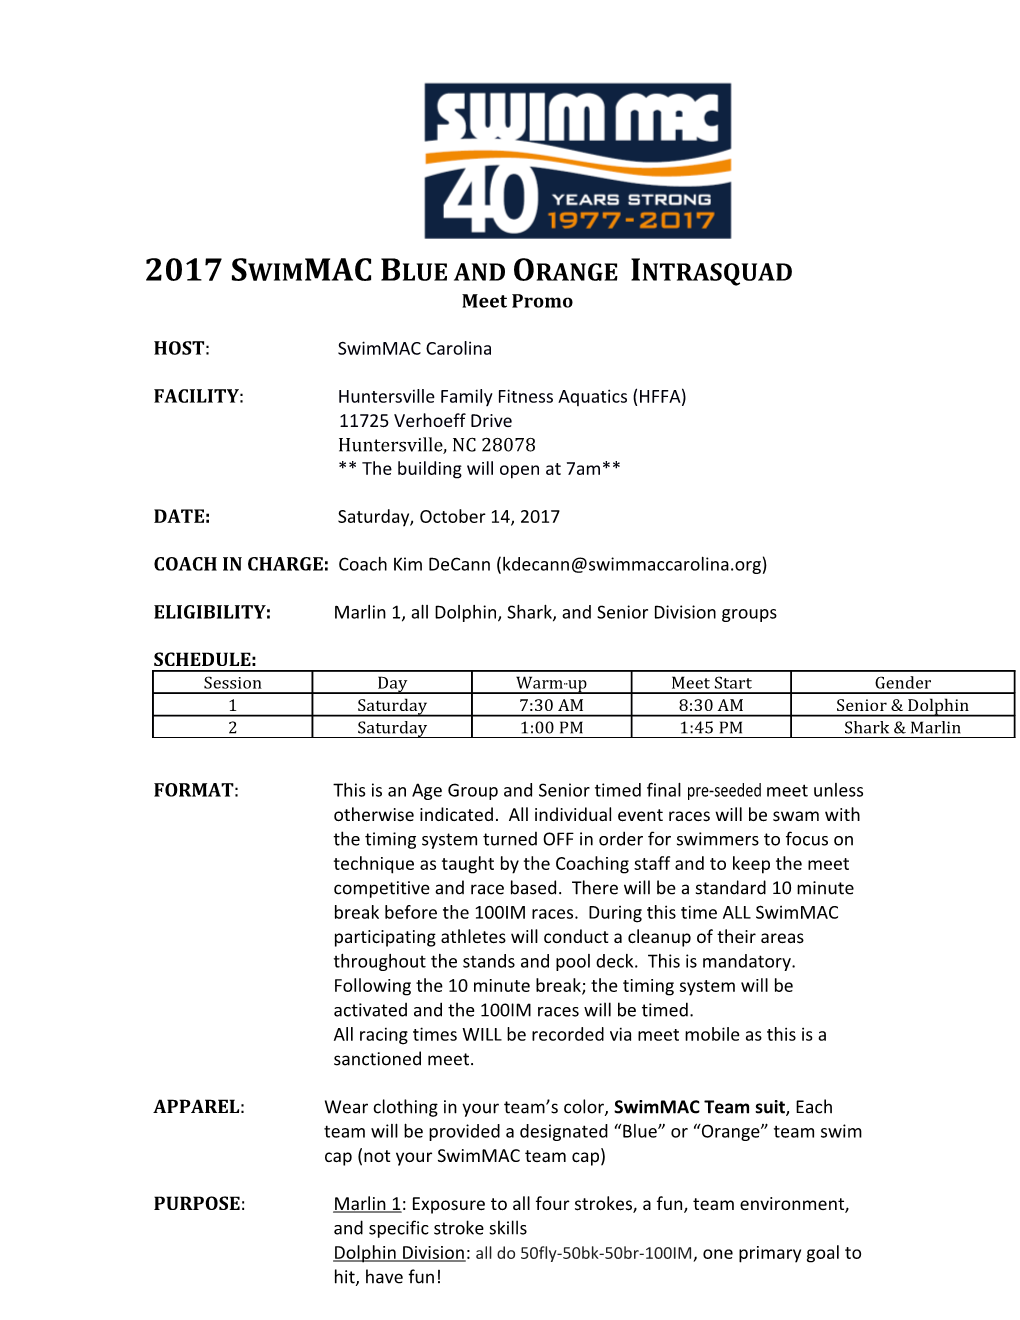 2017 Swimmac Blue and Orange Intrasquad